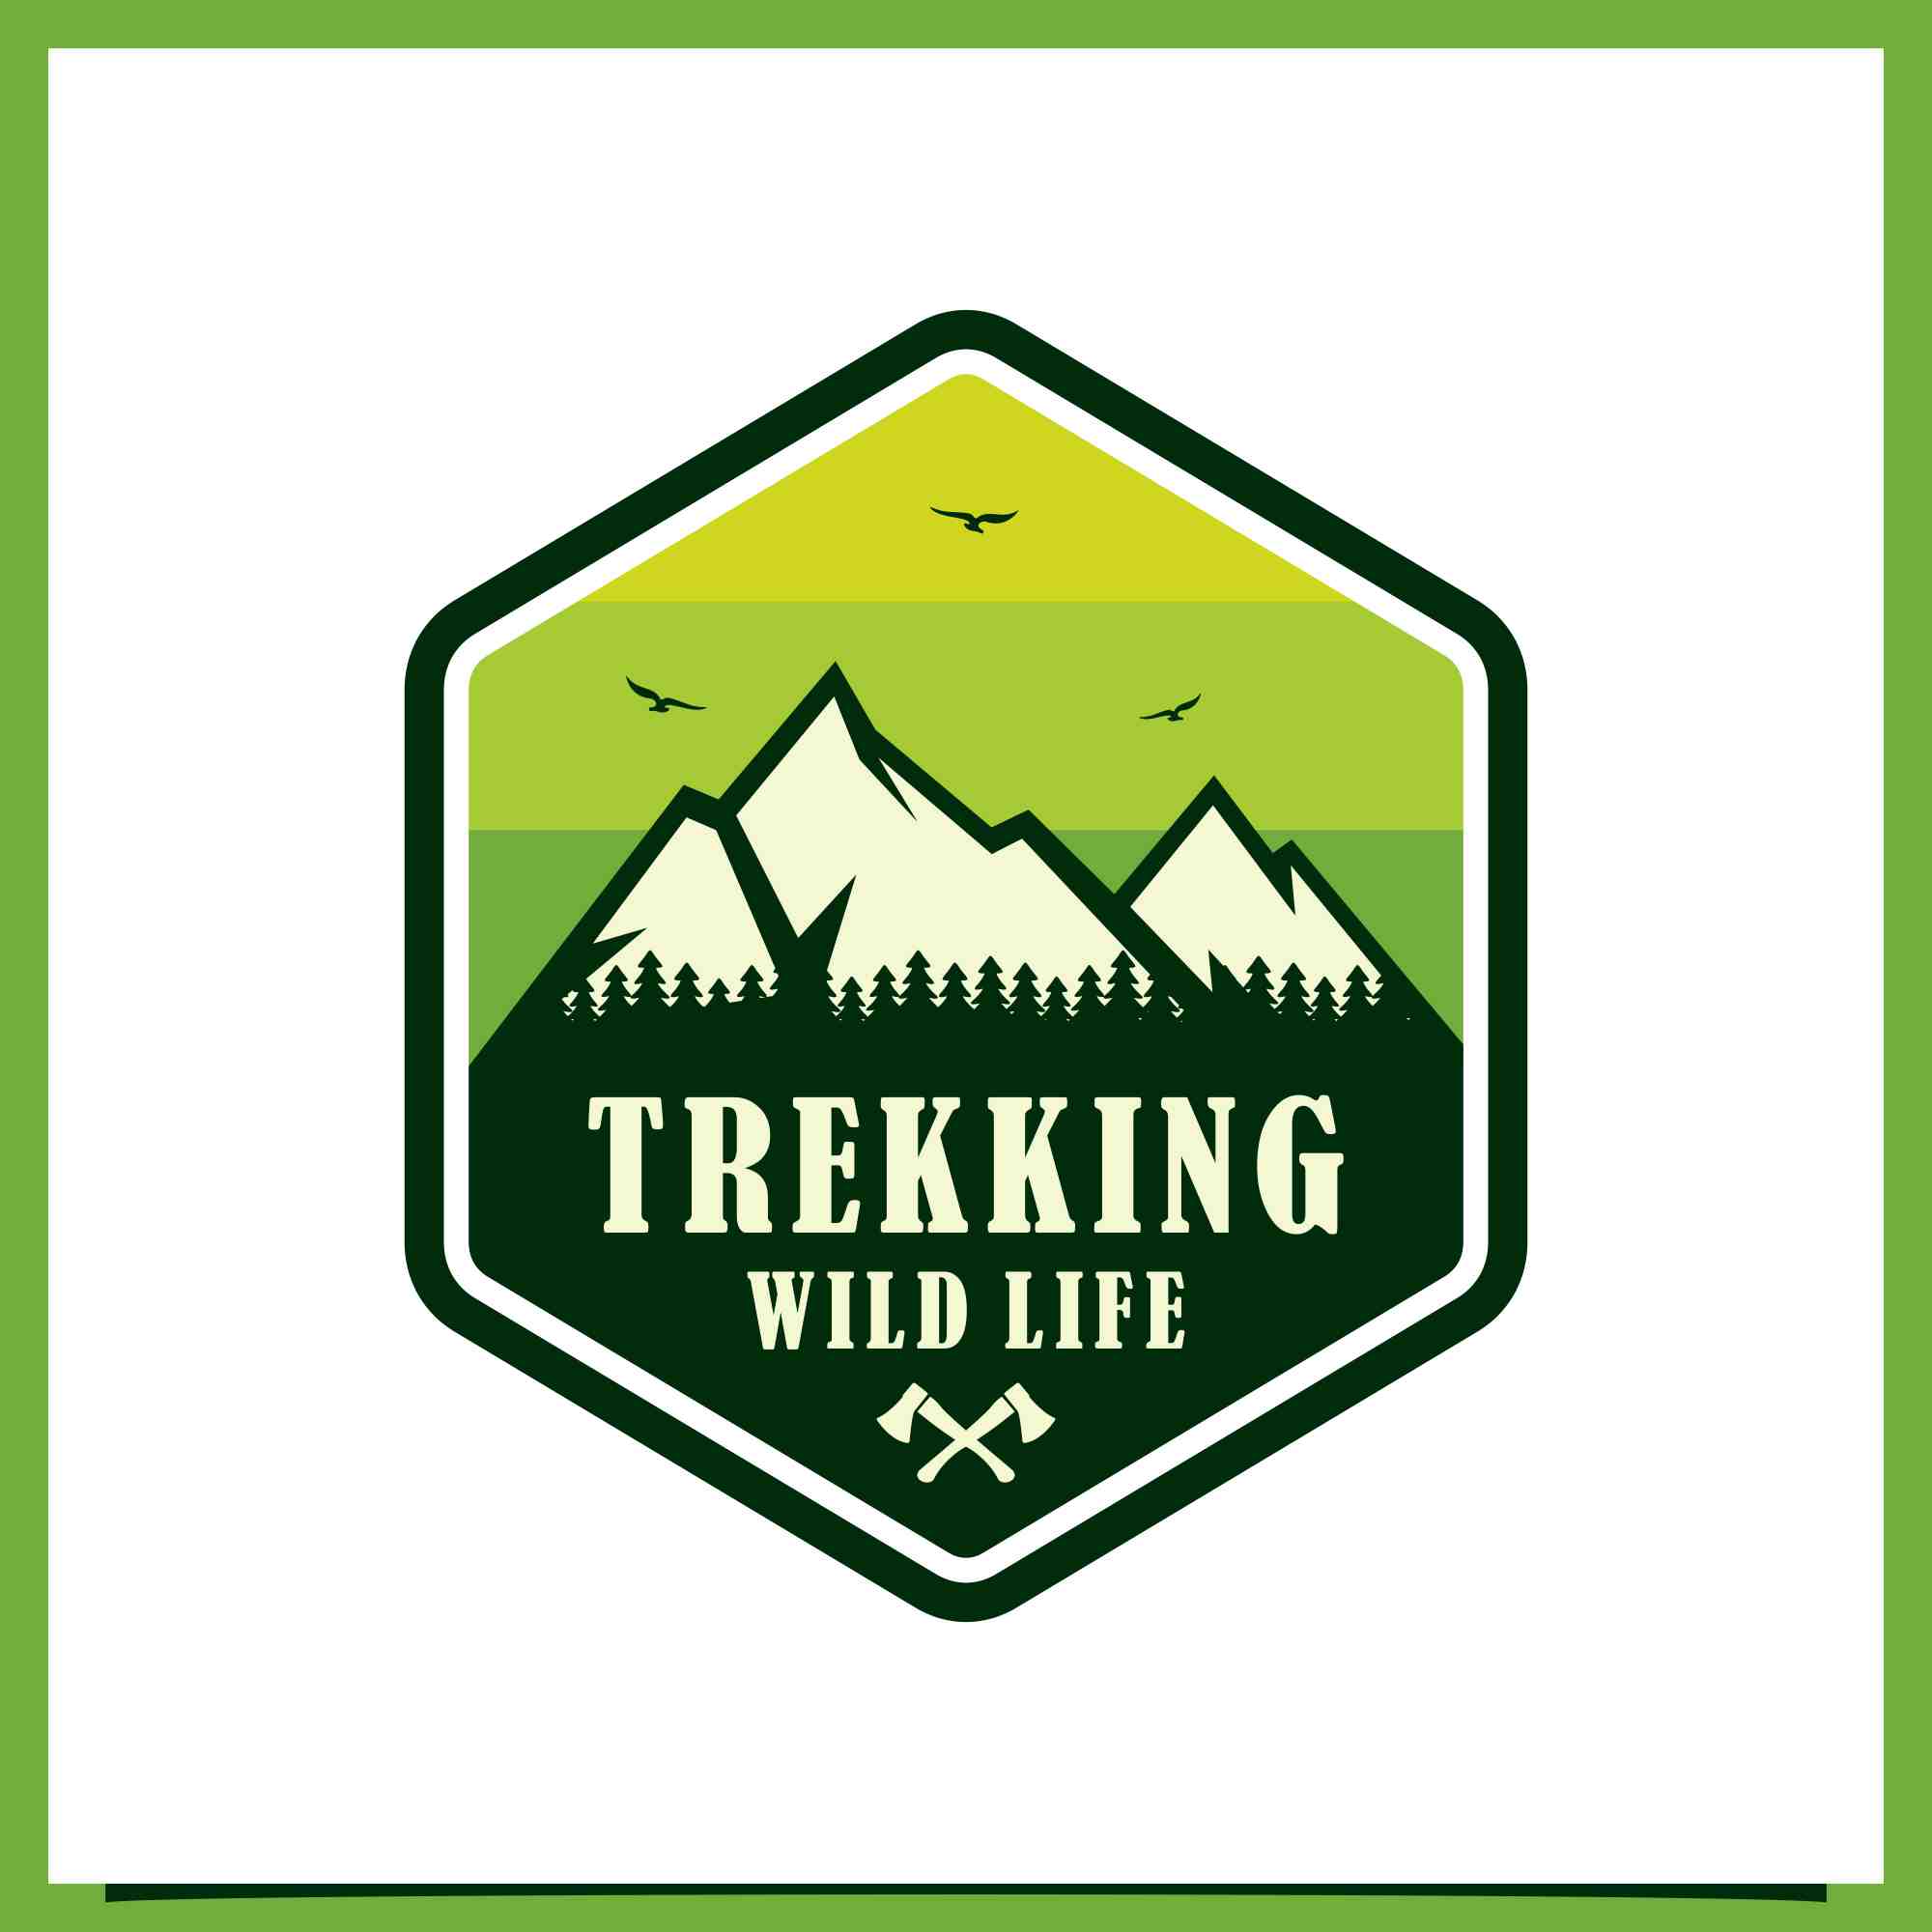 Set Trekking adventure wild life logo collection - $4 preview image.